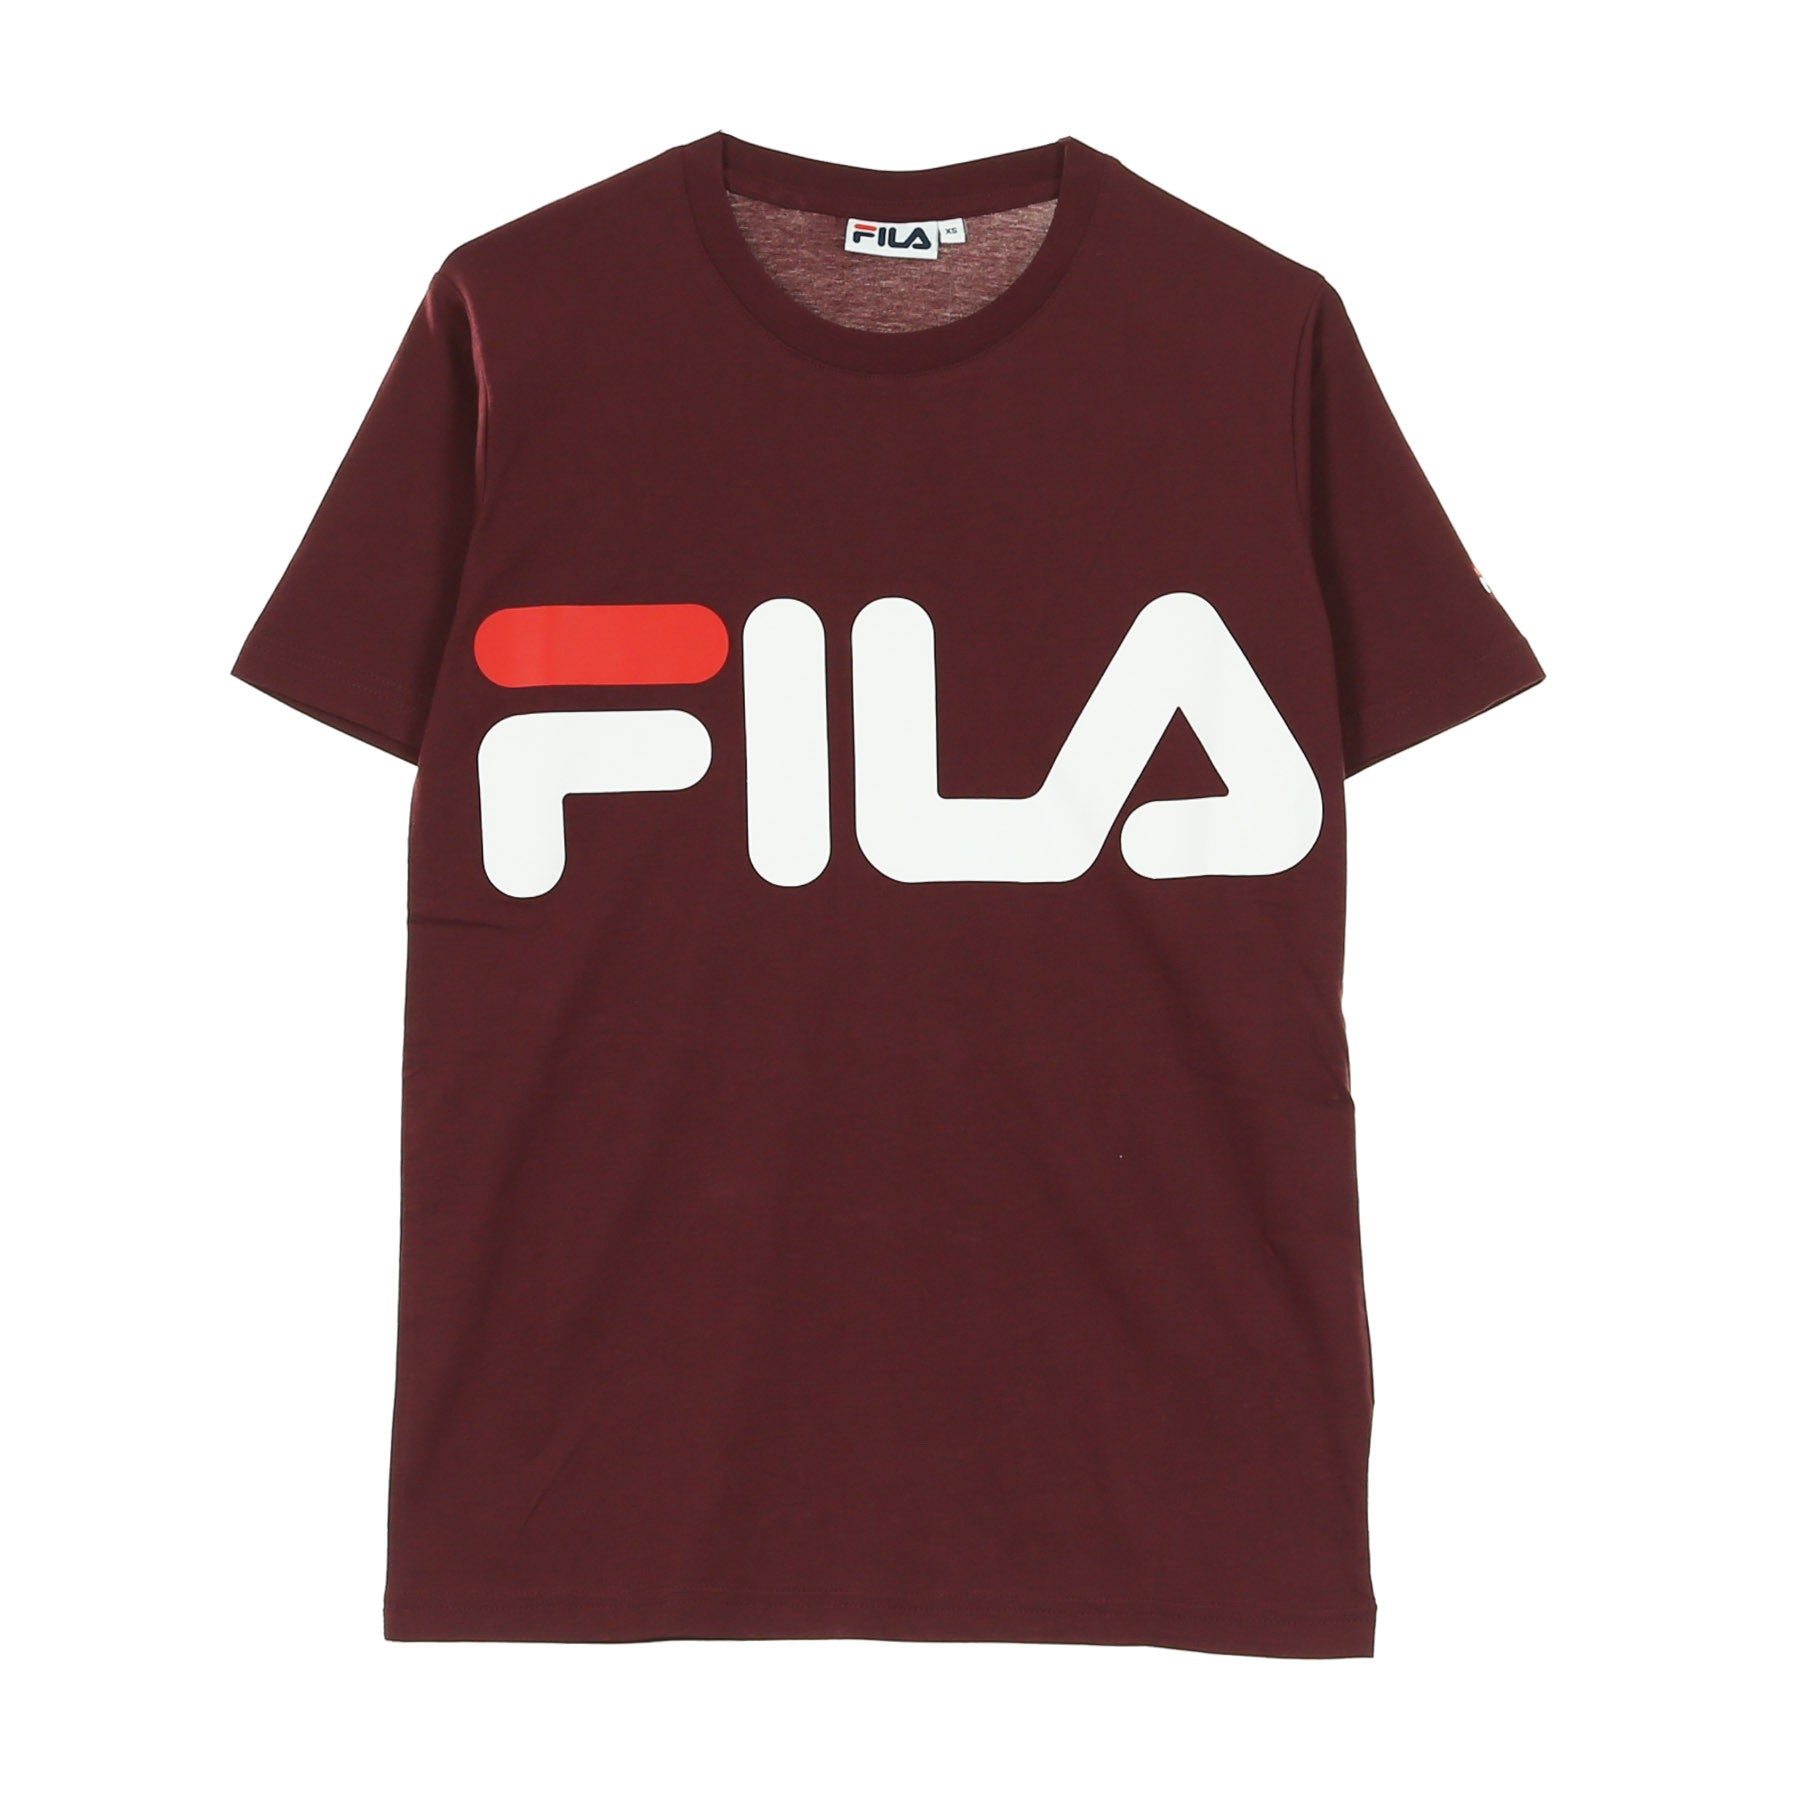 Fila, Maglietta Uomo Classic Logo Tee, Tawny Port